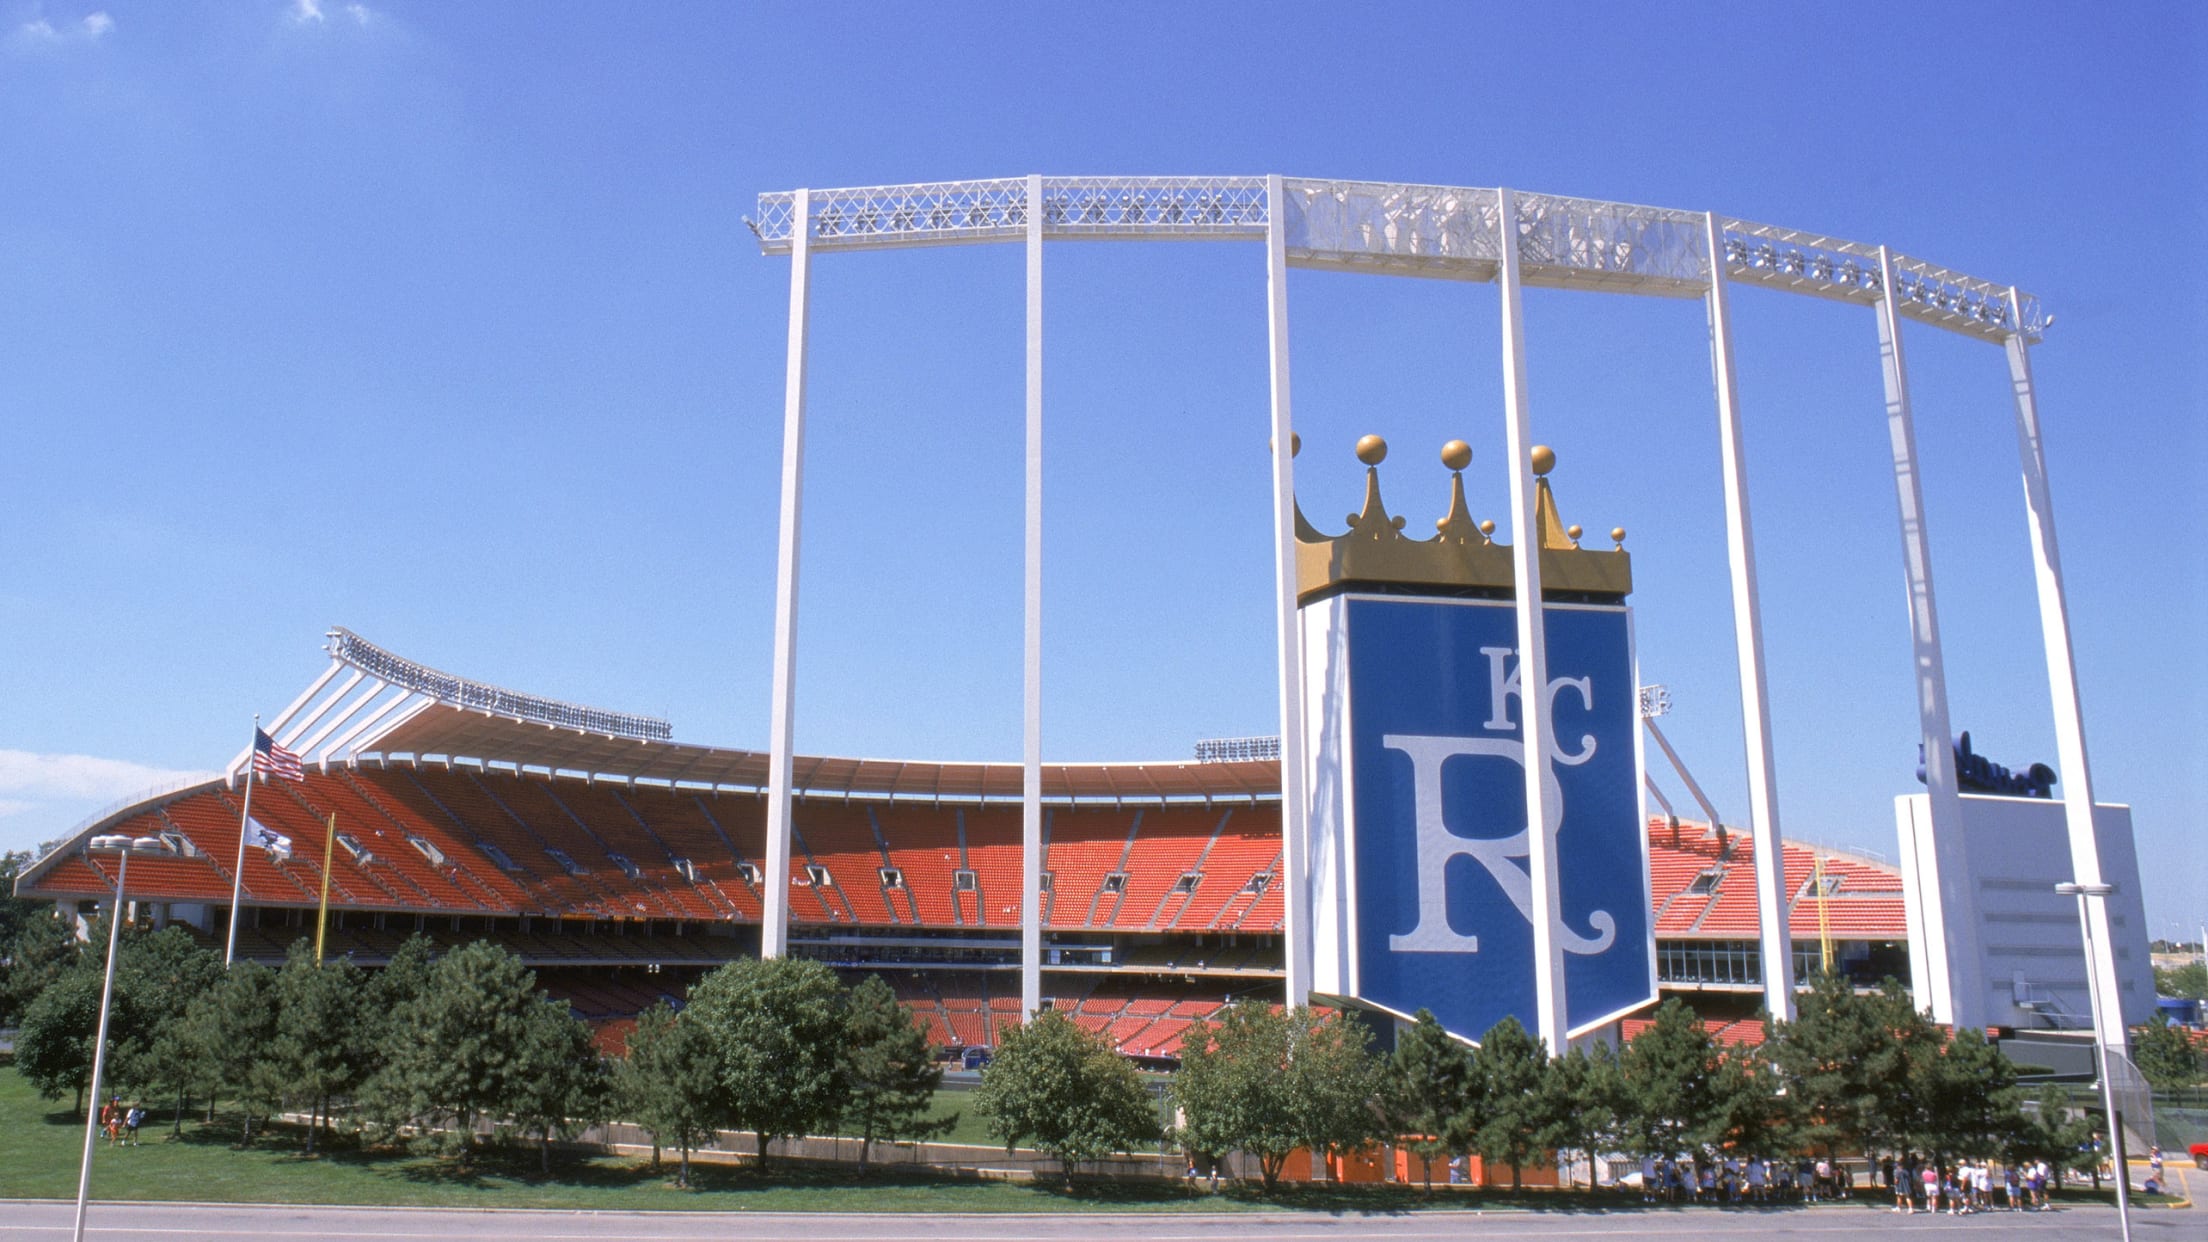 KC Royals History - Kings of Kauffman